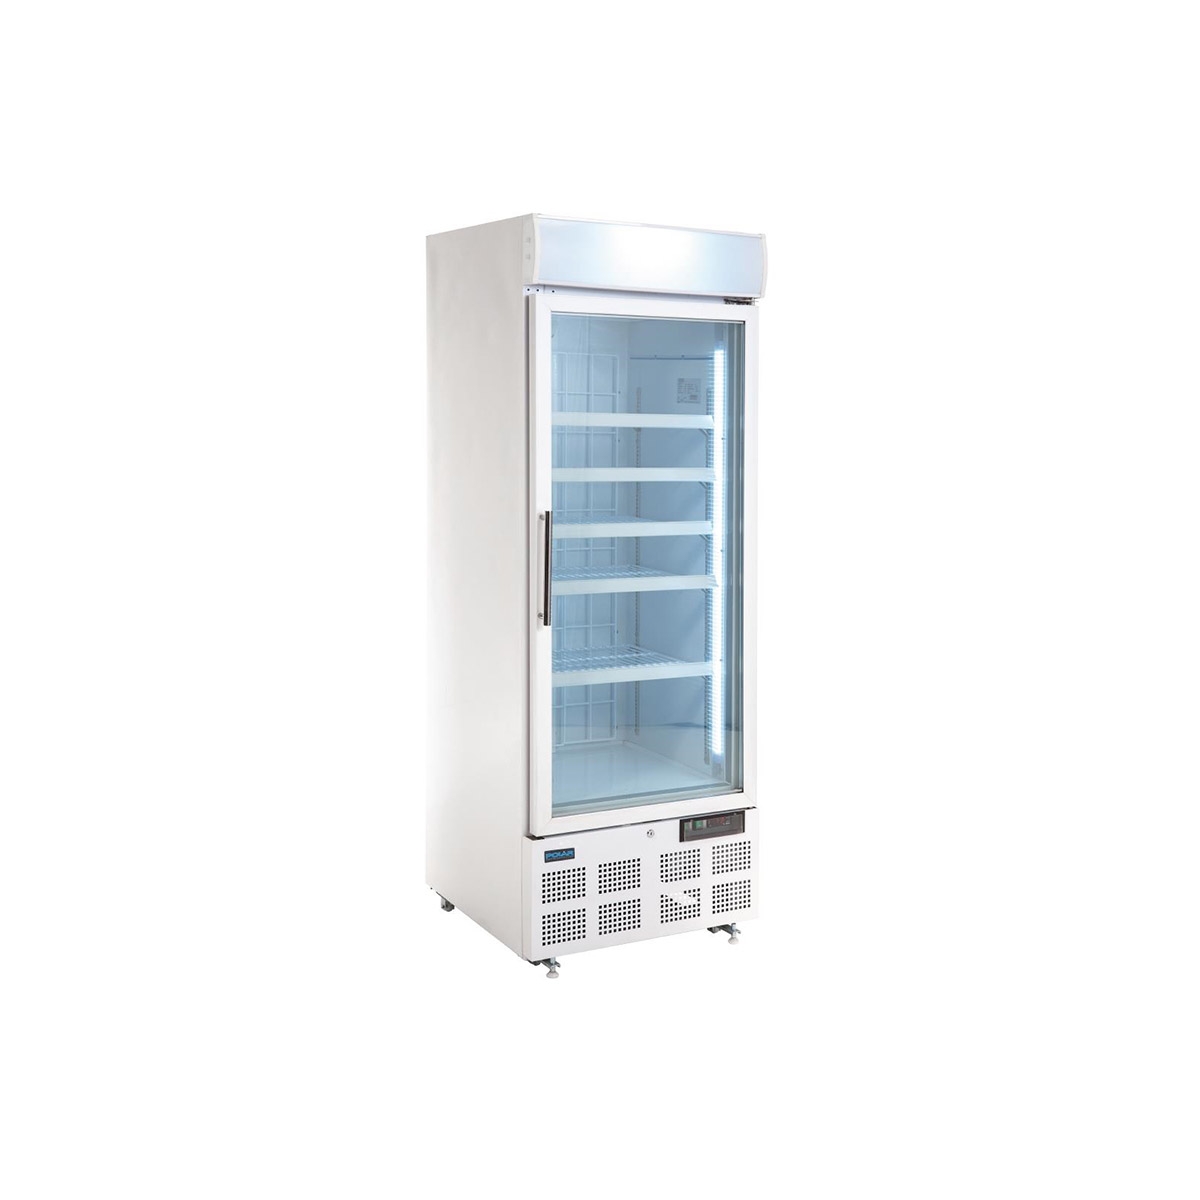 Polar G-Series Upright Display Freezer 412Ltr White